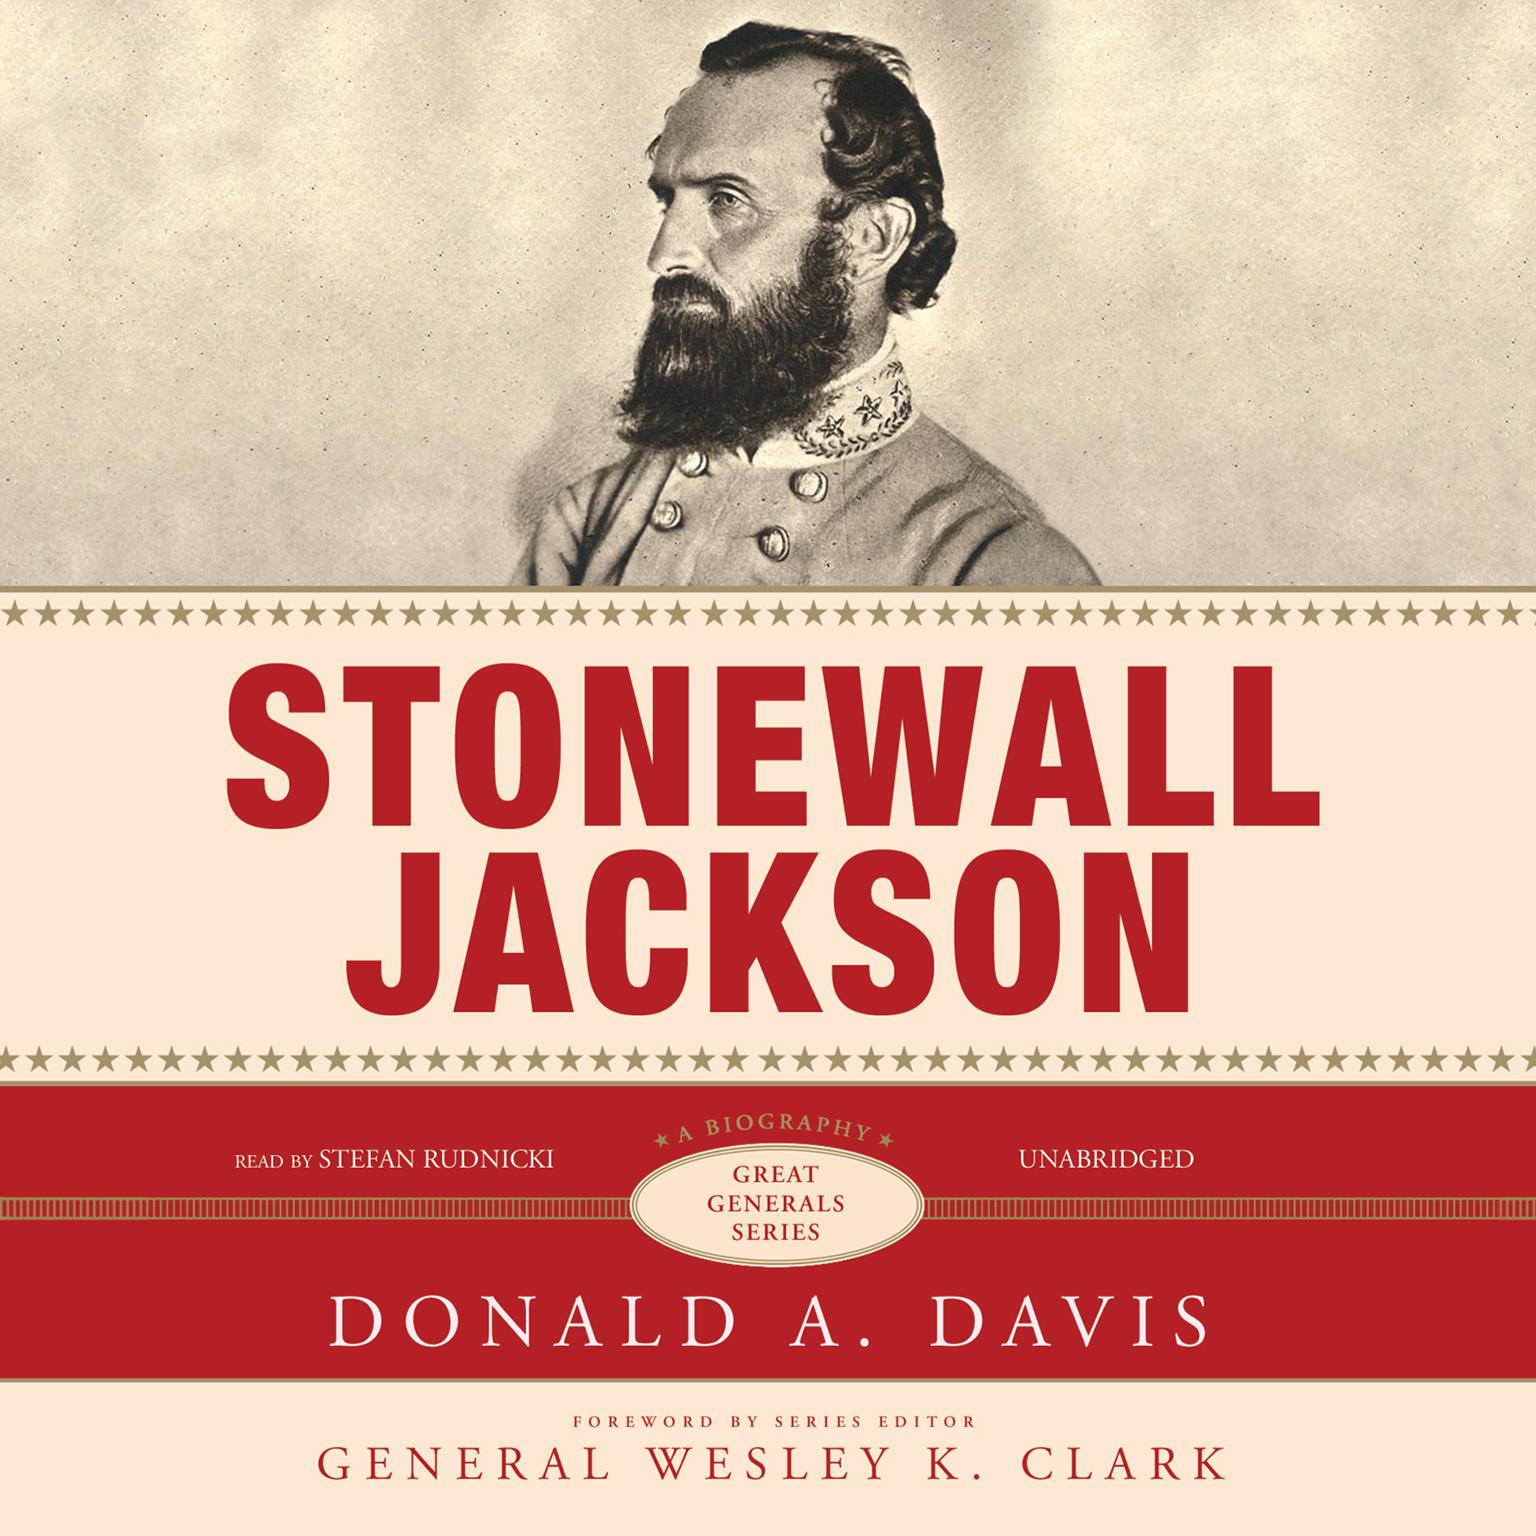 Stonewall Jackson: A Biography Audiobook, by Donald A. Davis